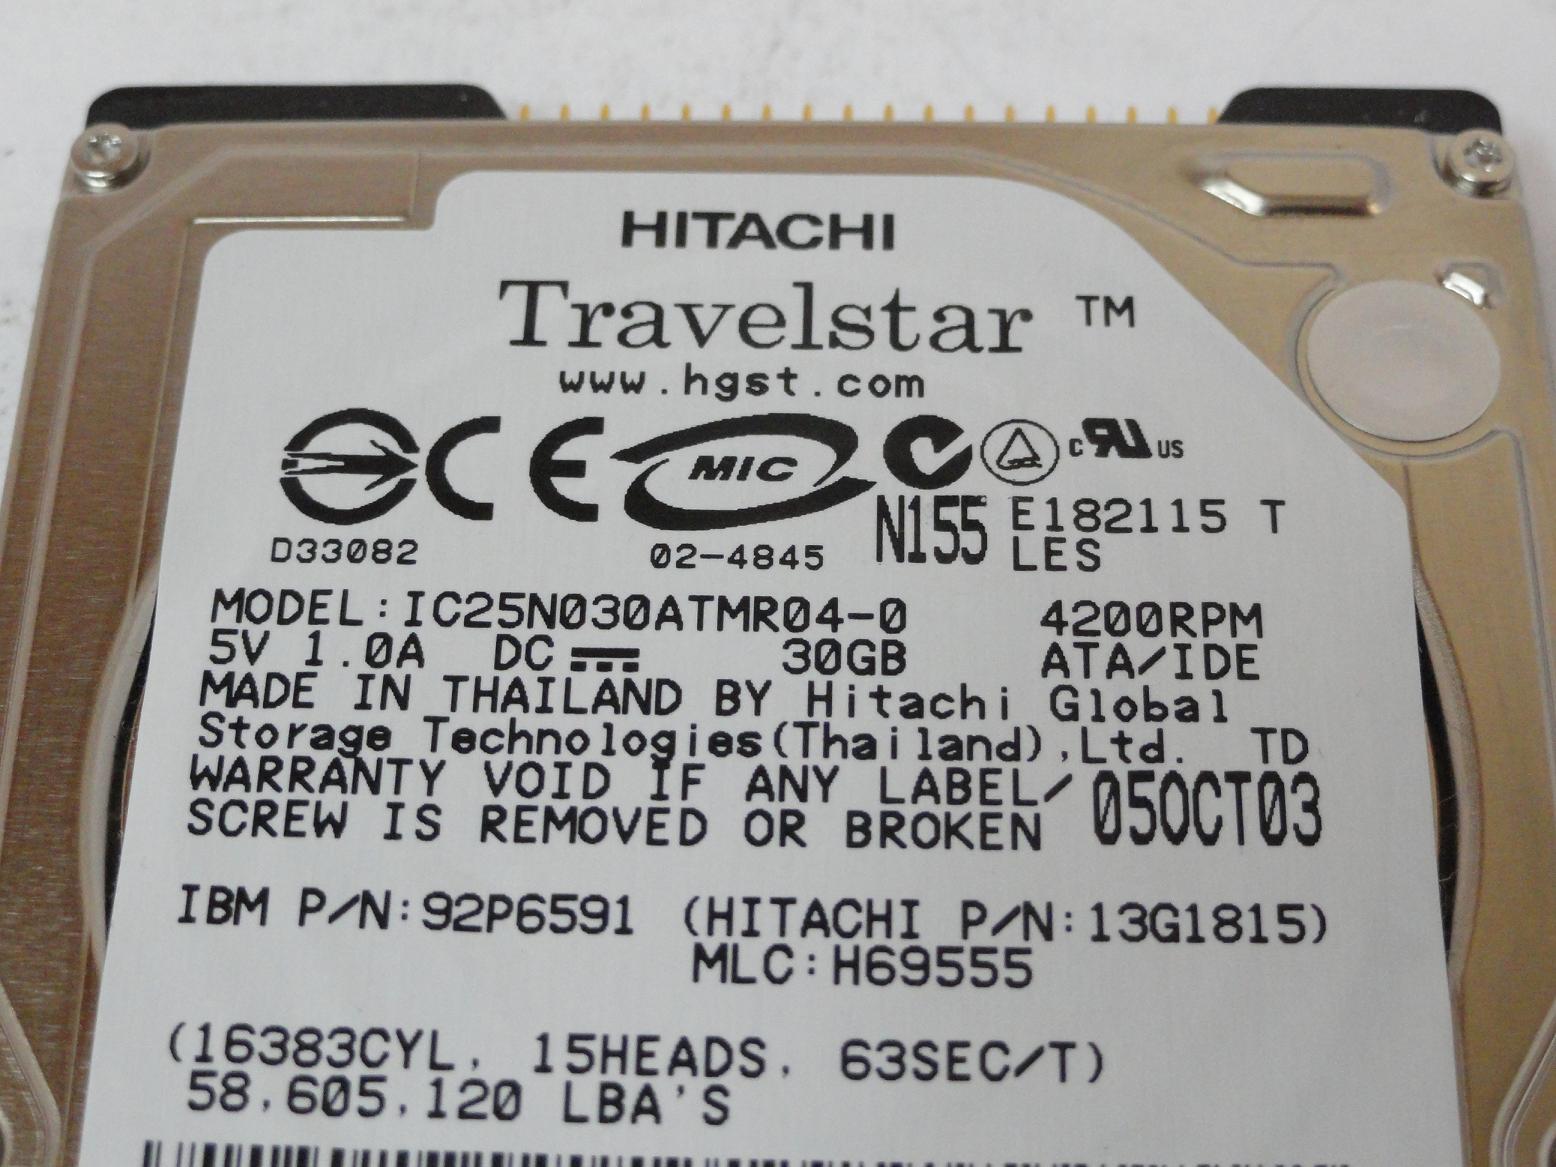 PR23952_13G1815_Hitachi IBM 30GB IDE 4200rpm 2.5in HDD - Image3